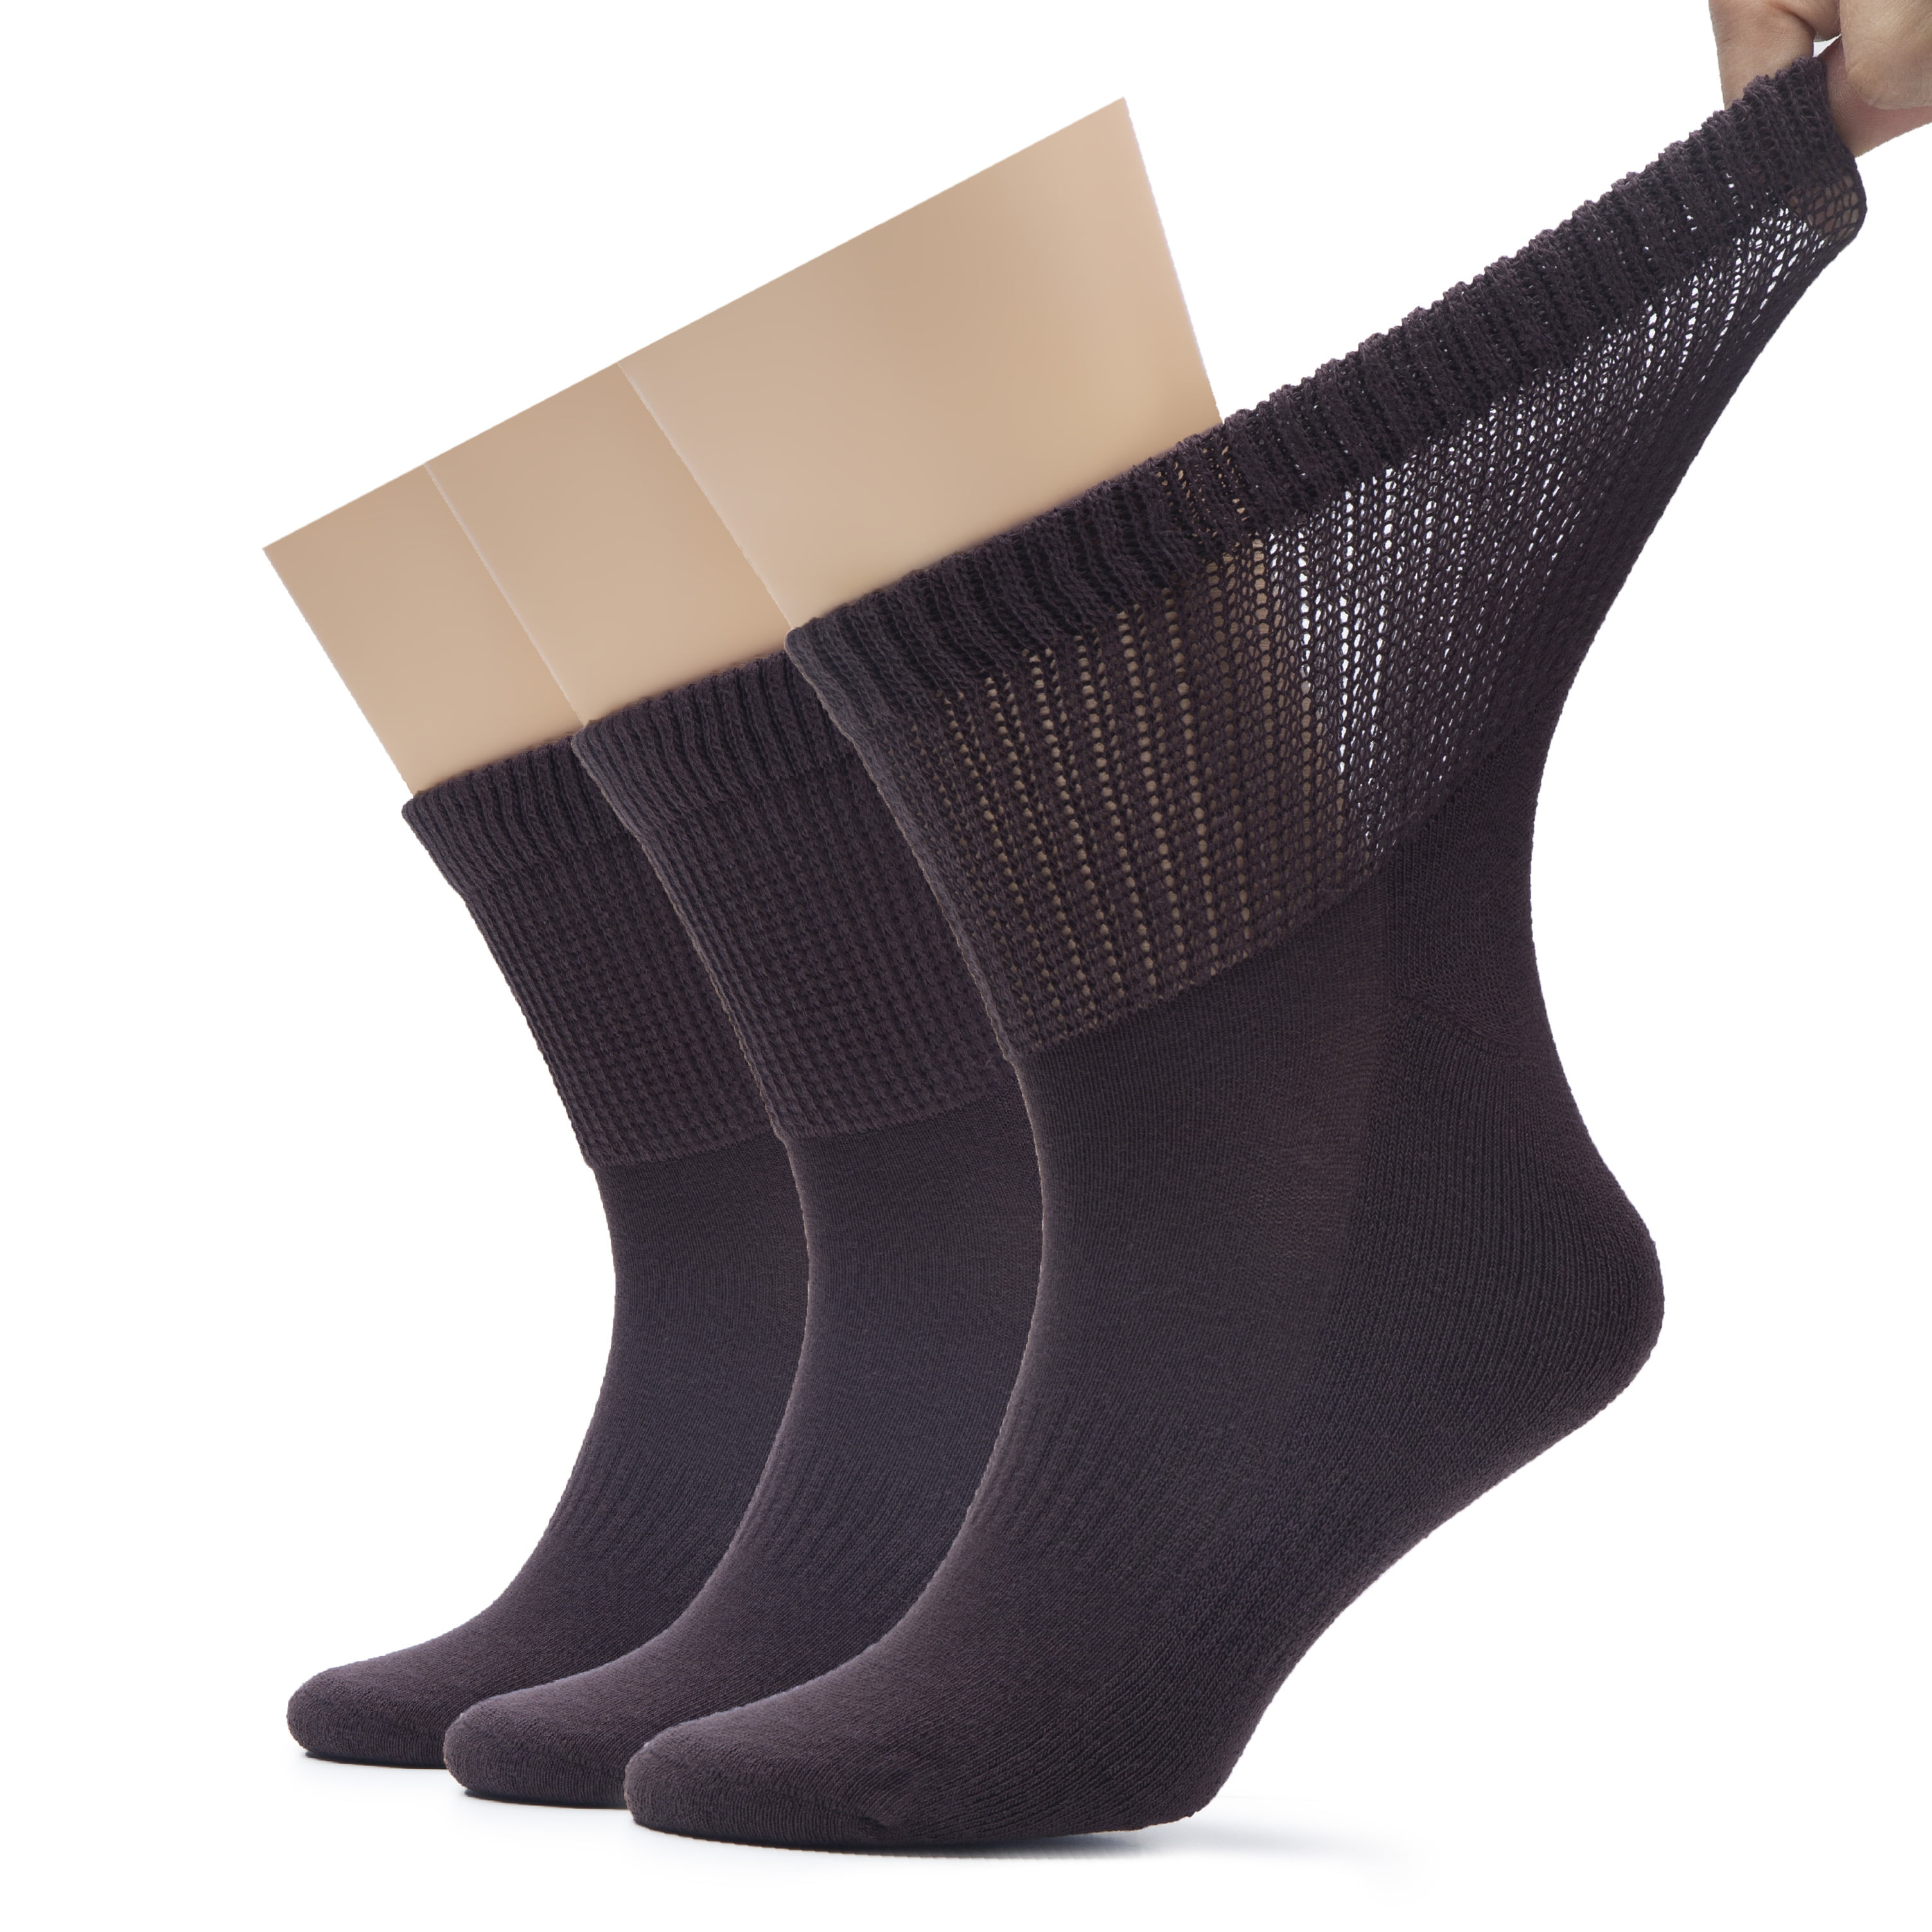 New Gray Men Diabetic Ankle Quarter Circulatory Health Socks Cotton Size 9-15 